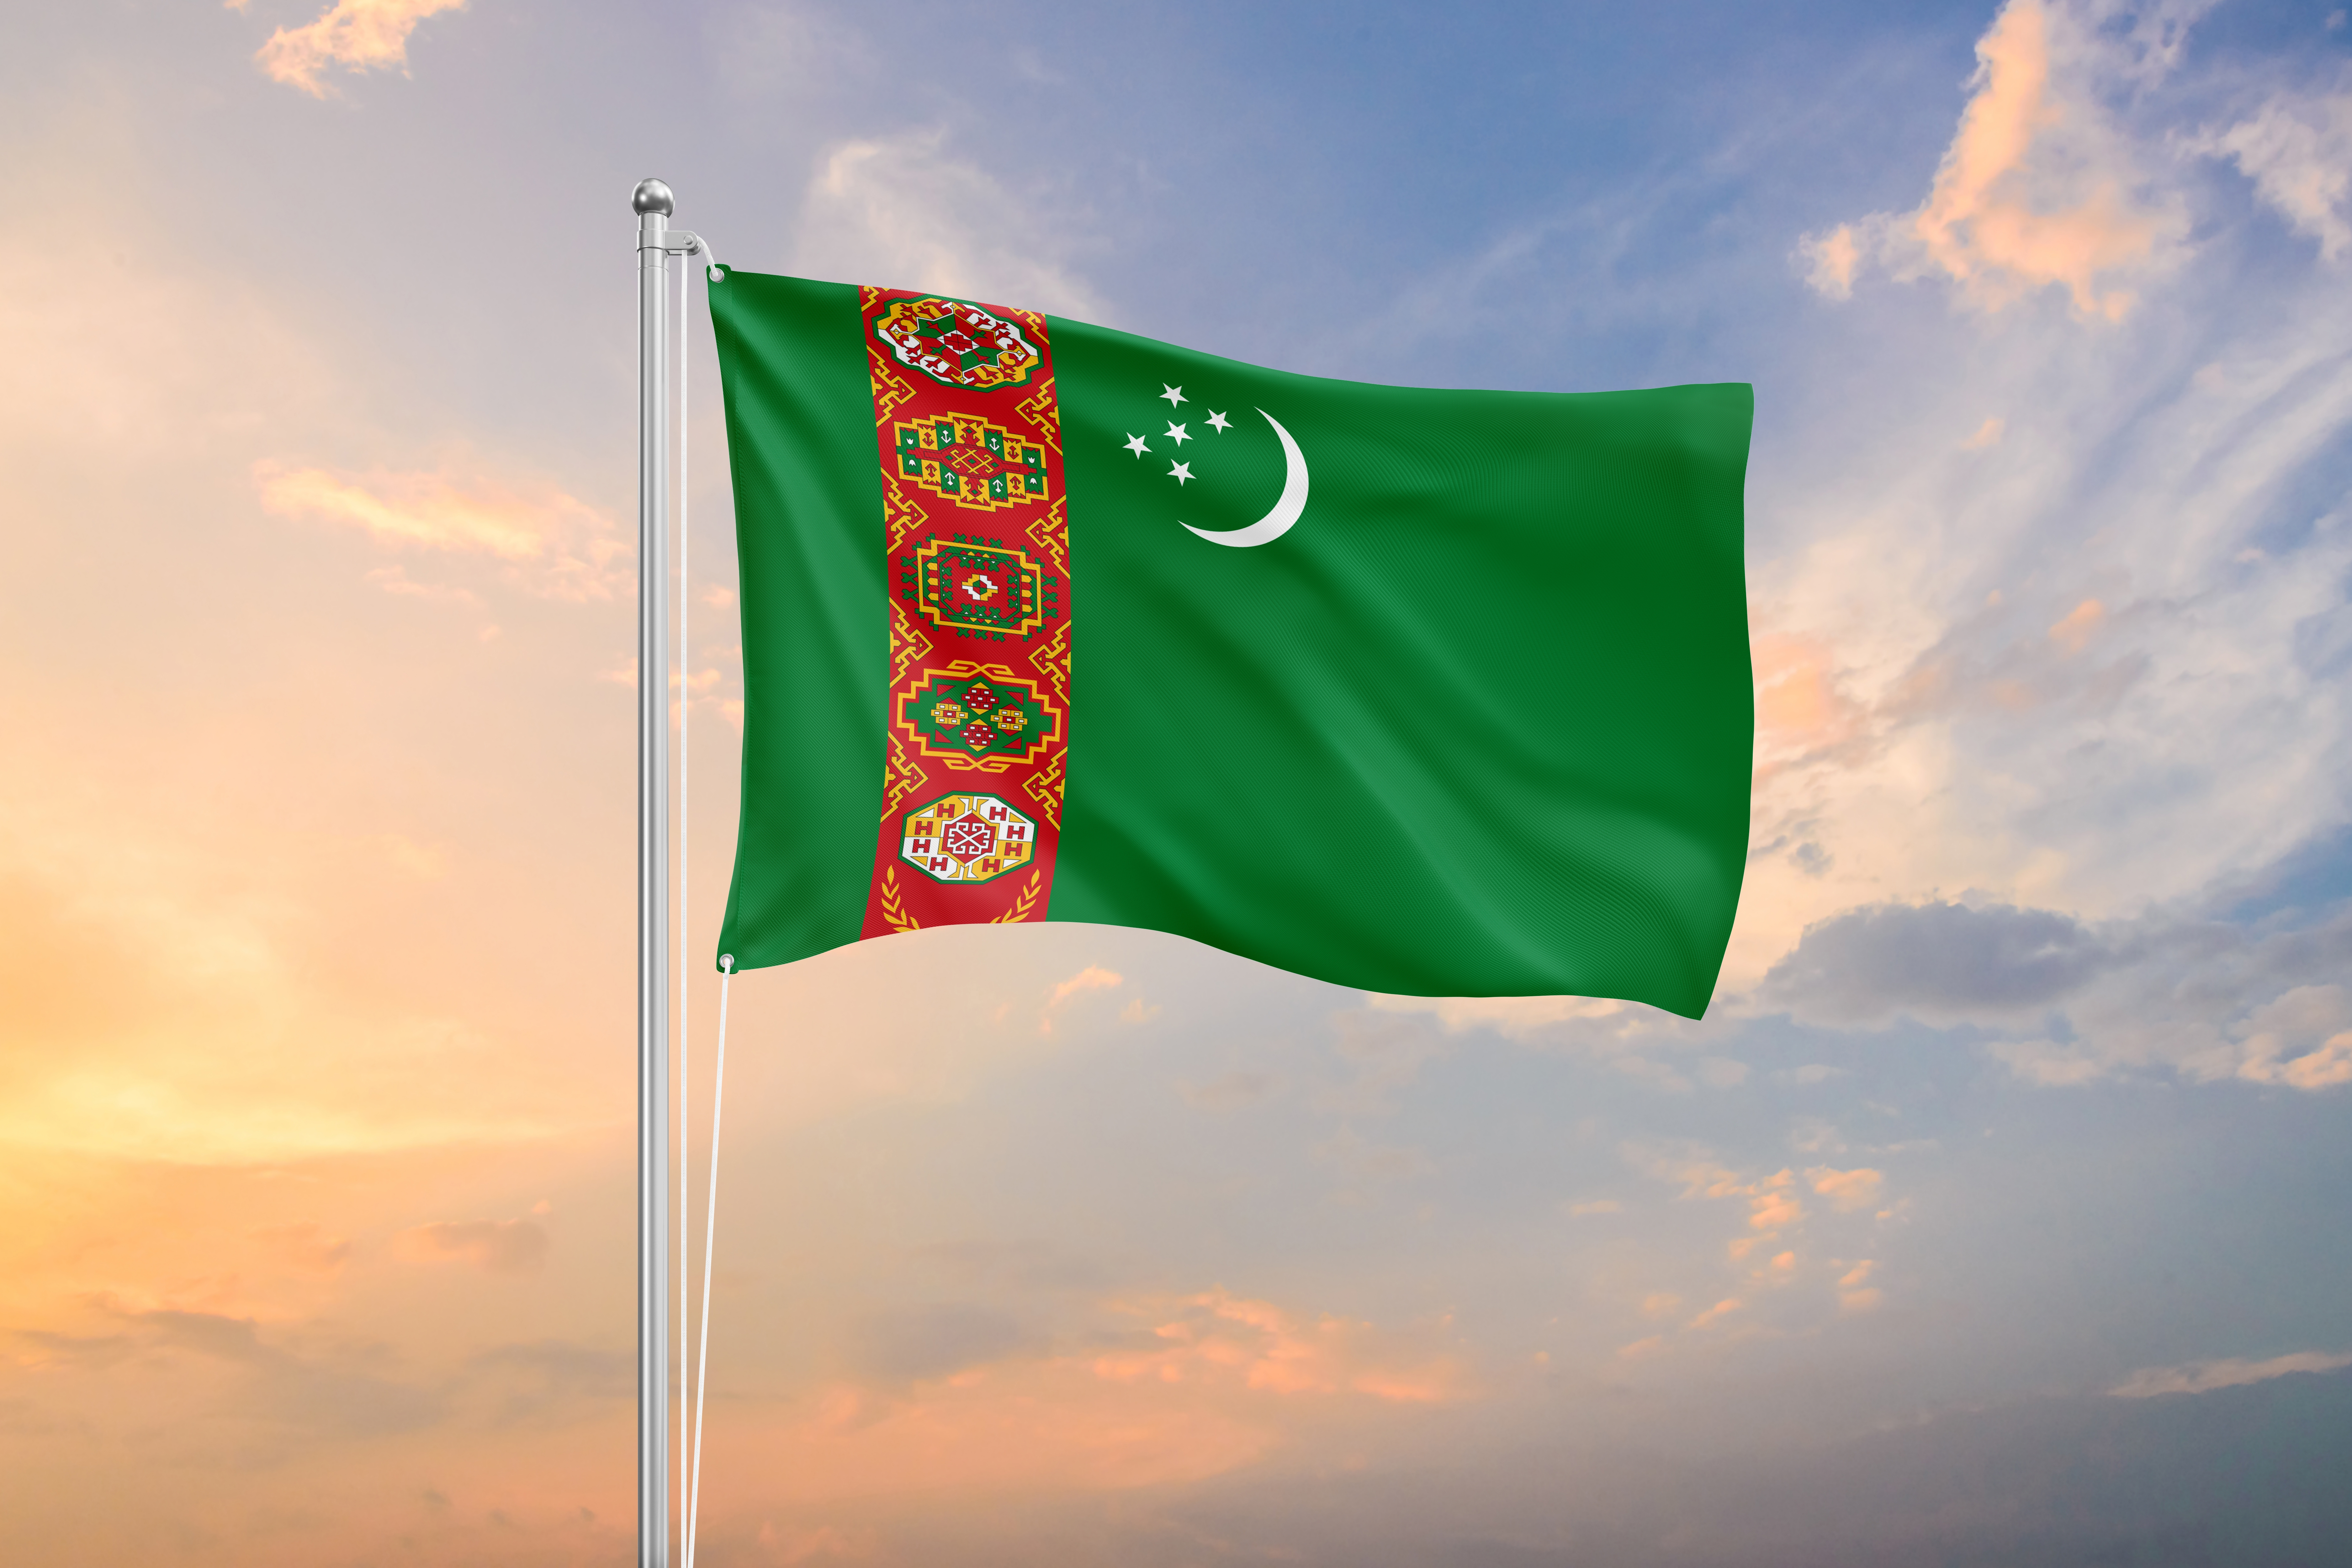 The flag symbolizes the citizenship of Turkmenistan